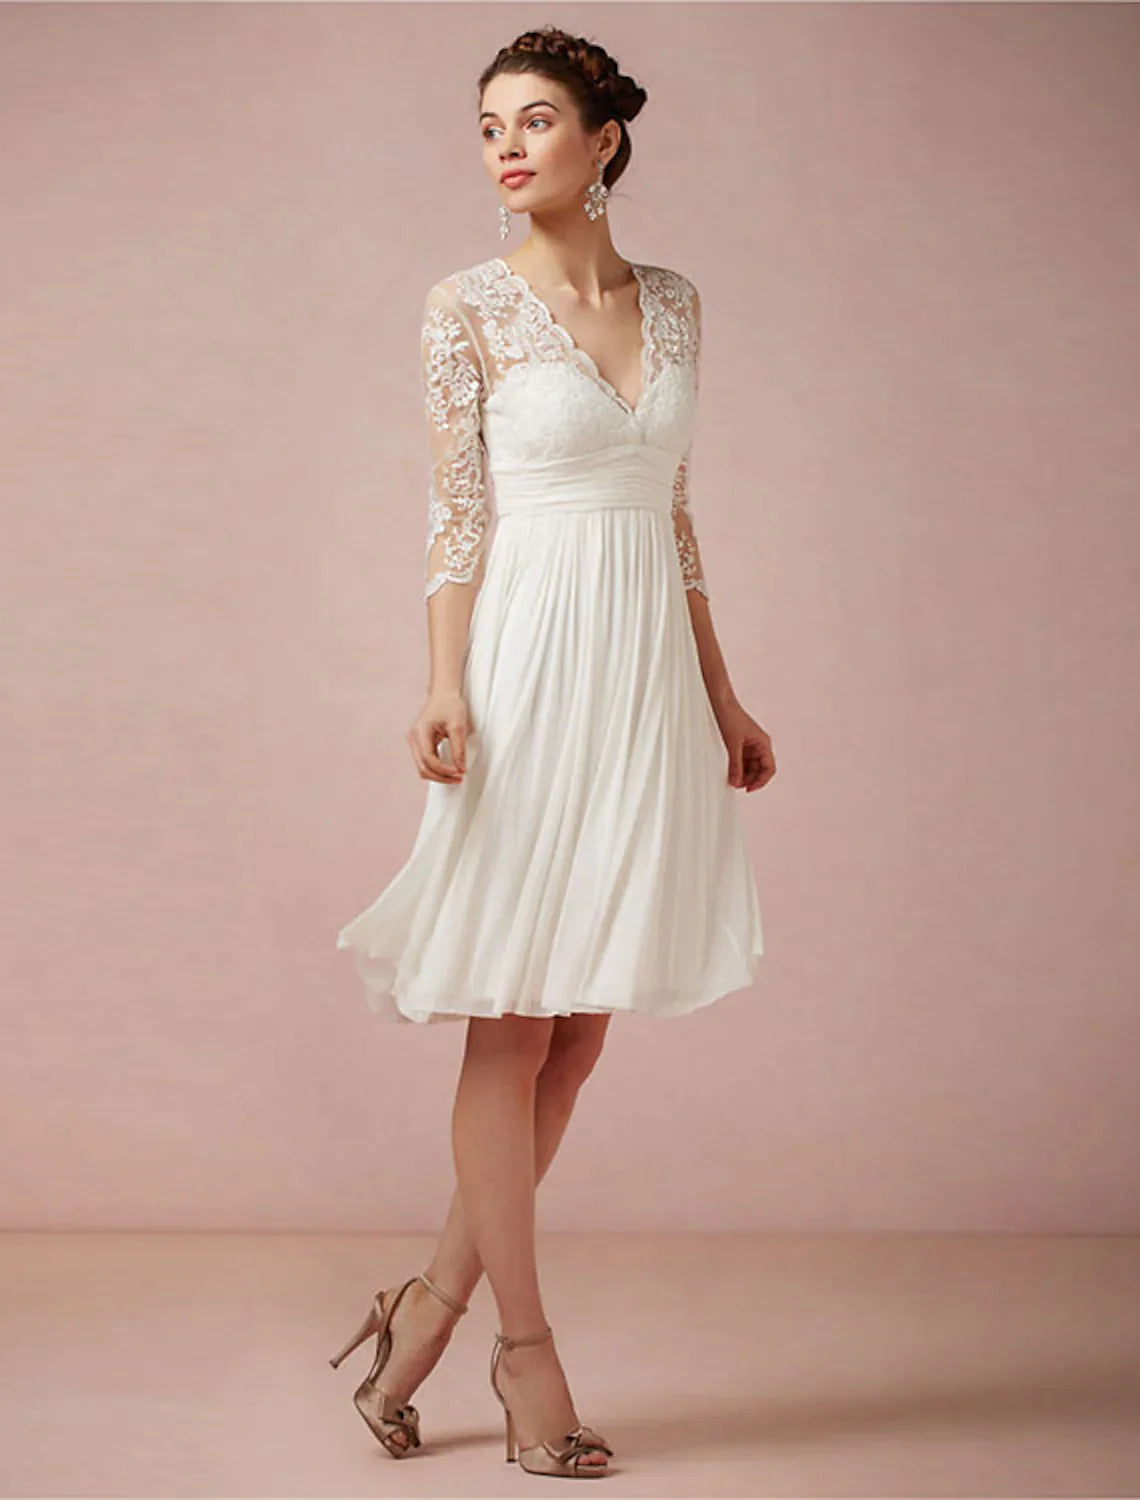 Bridal Open Back Little White Dresses Wedding Dresses Knee Length A-Line V Neck Chiffon